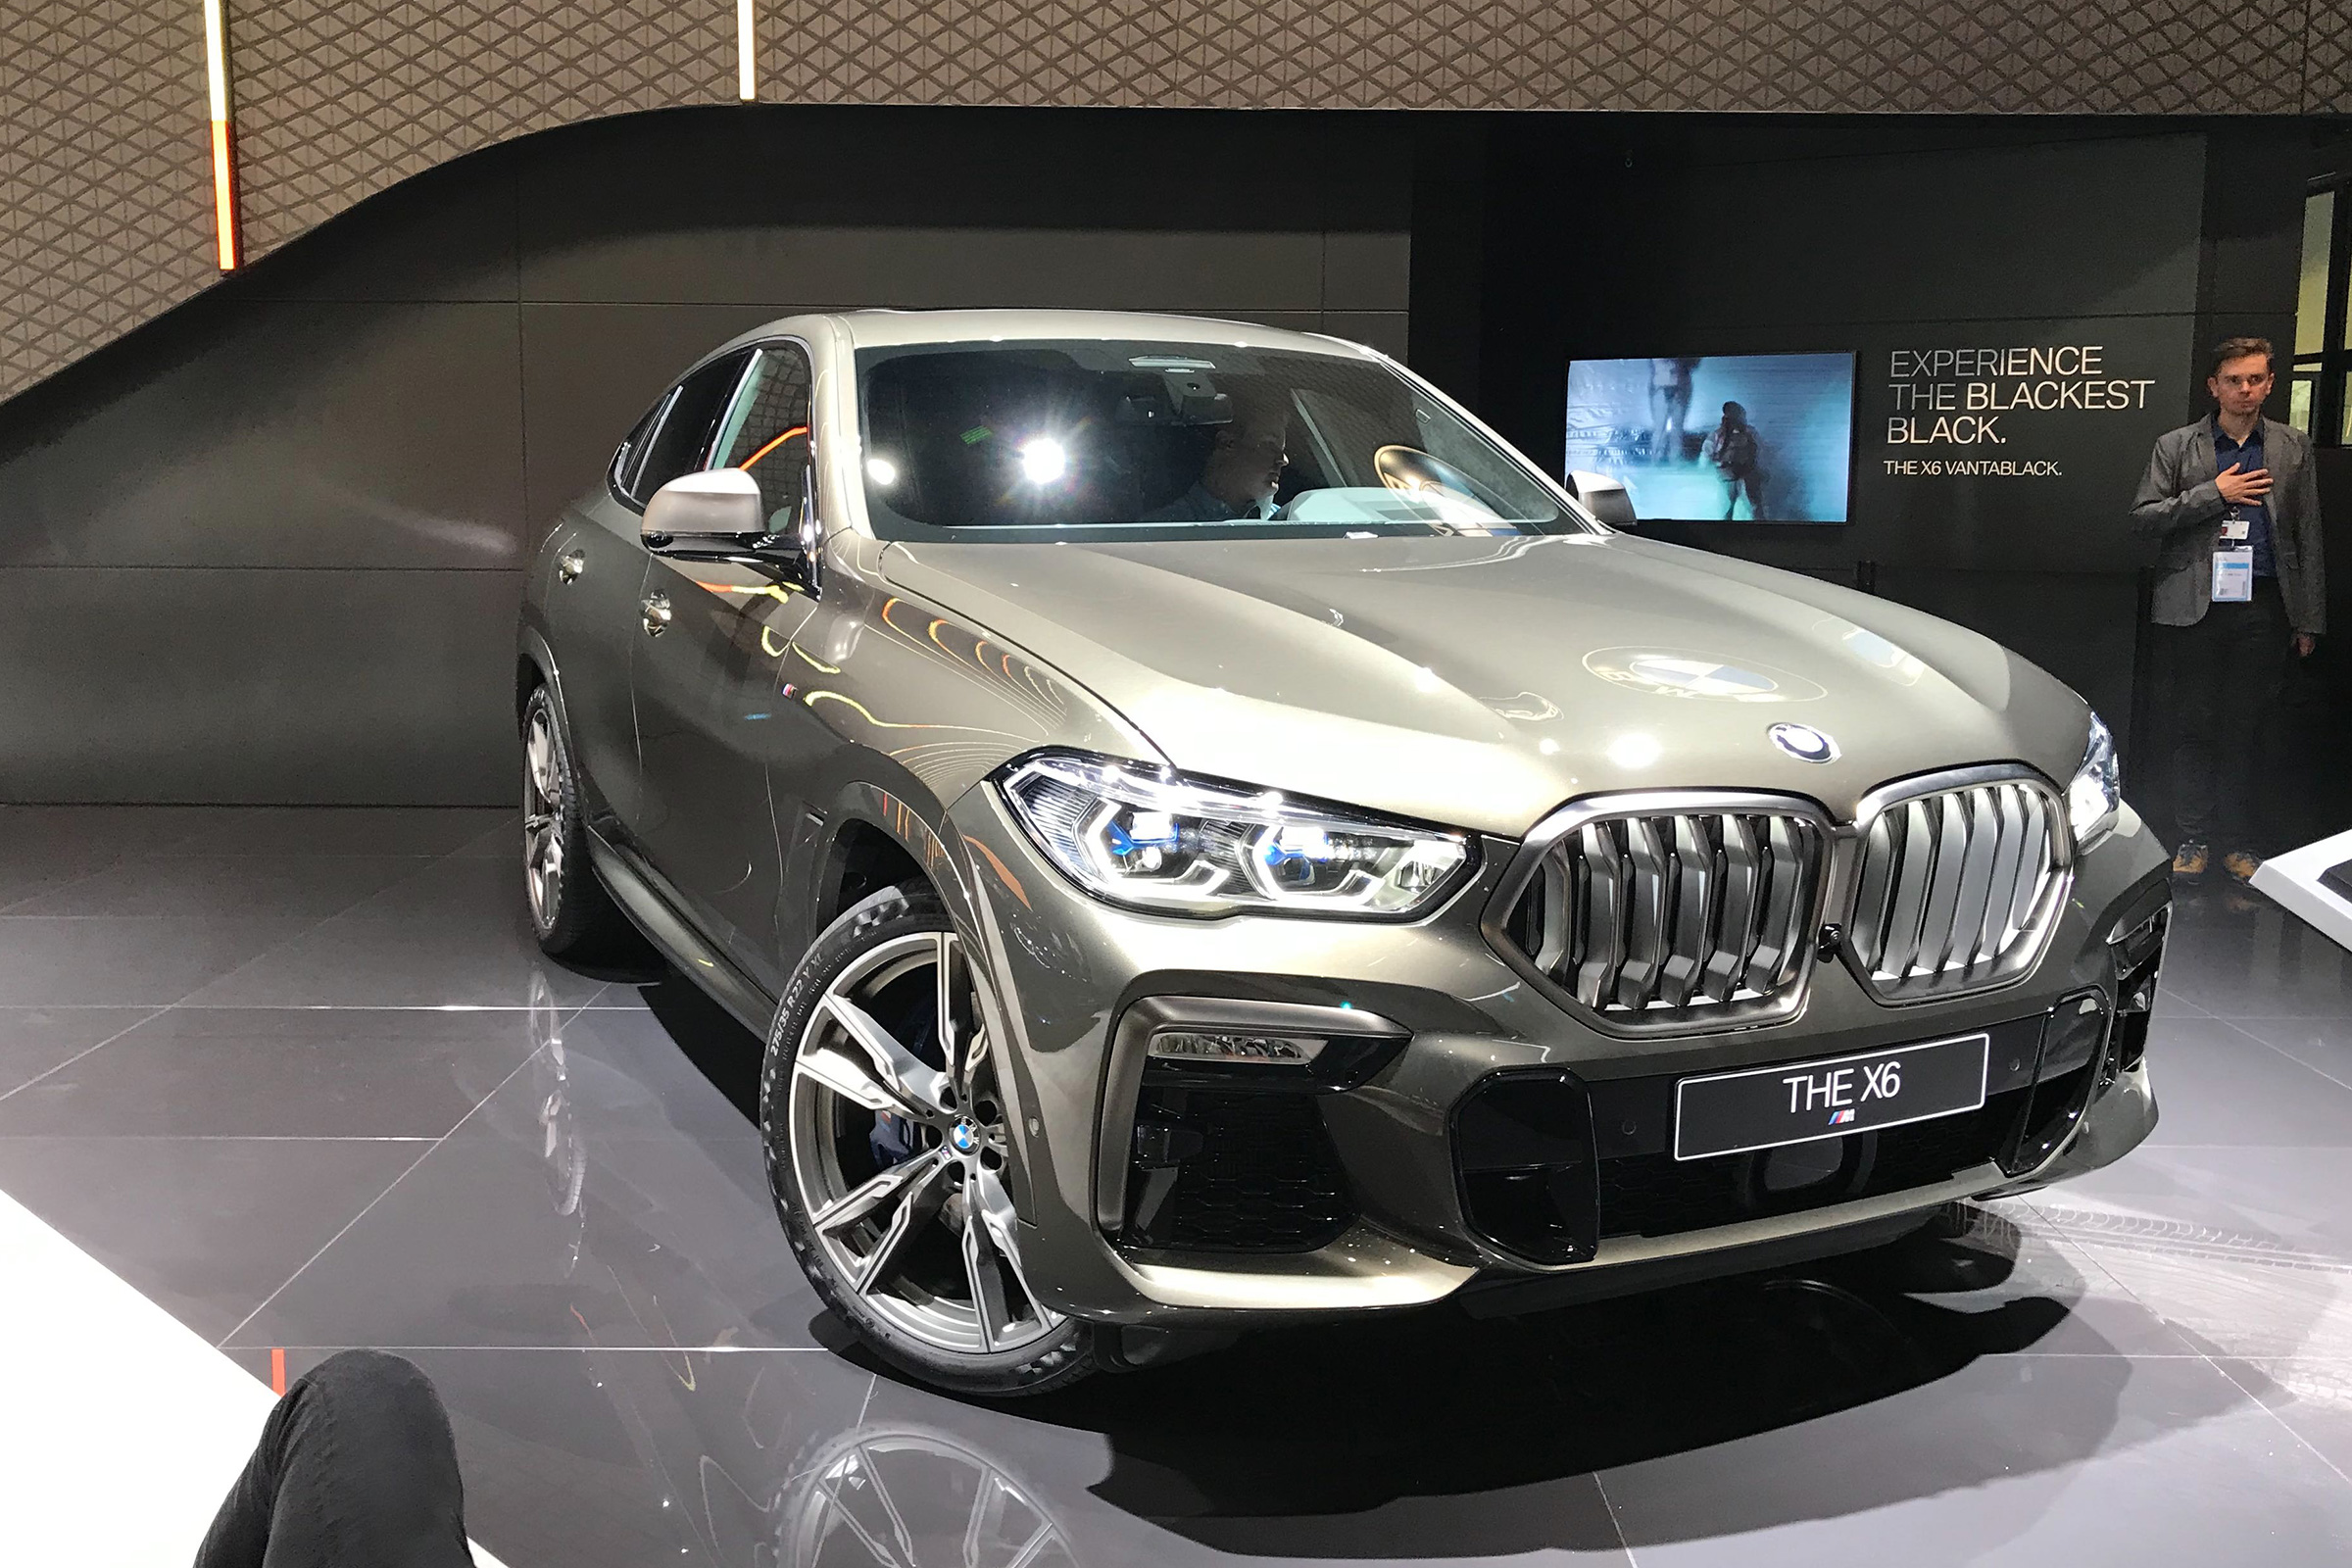 New 2019 BMW X6 revealed at Frankfurt Auto Express